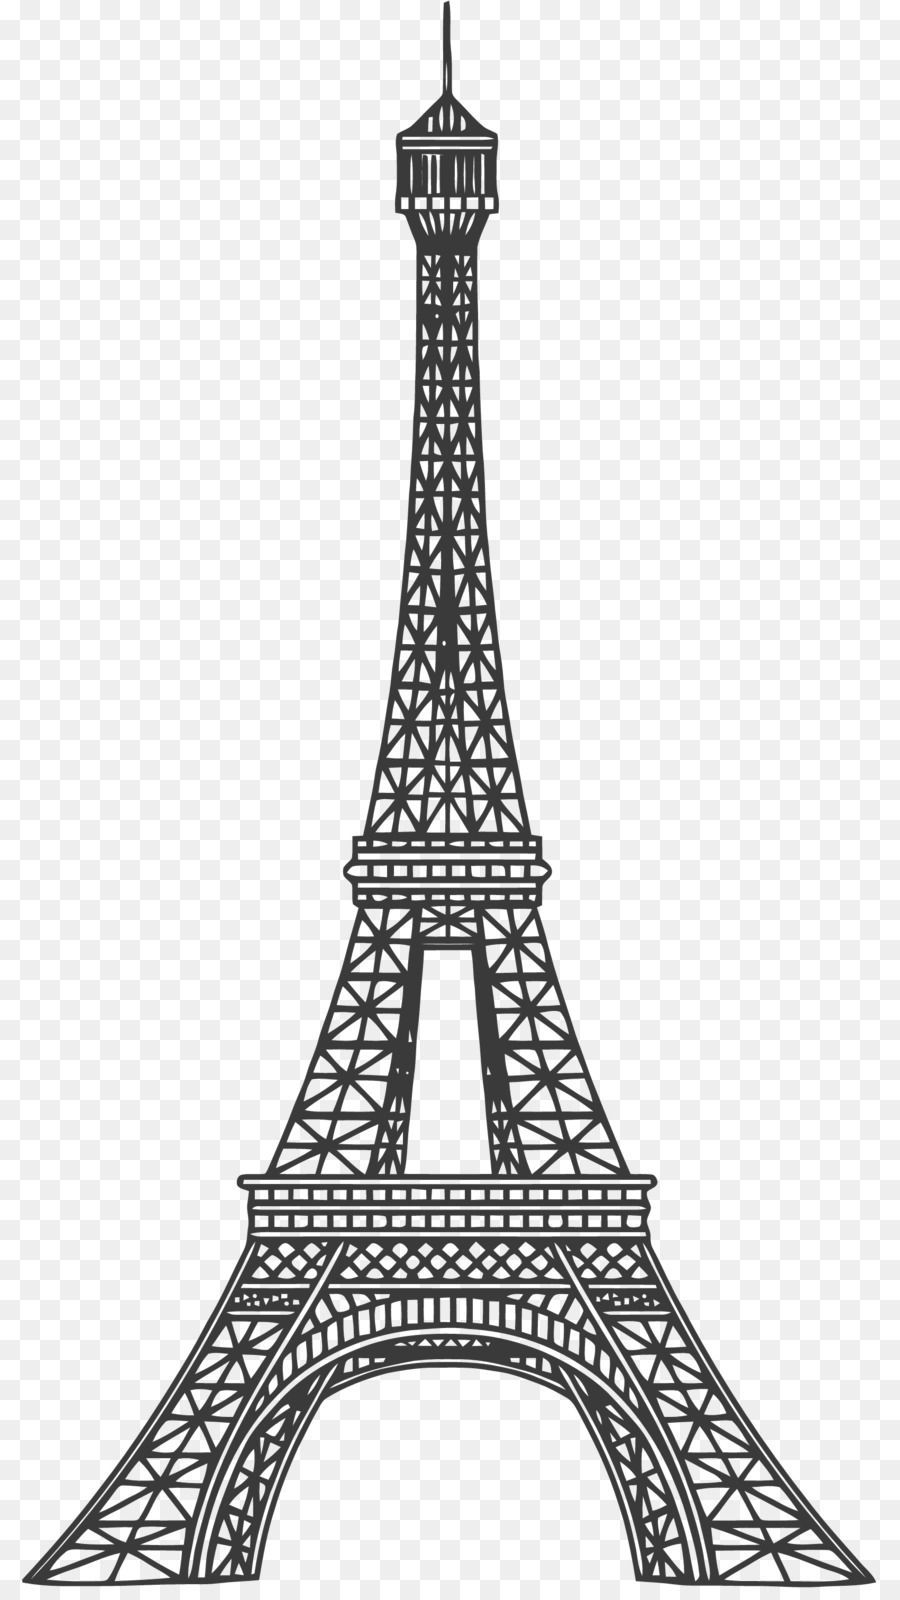 Eiffel Tower Wallpaper - Paris png download - 500*500 - Free